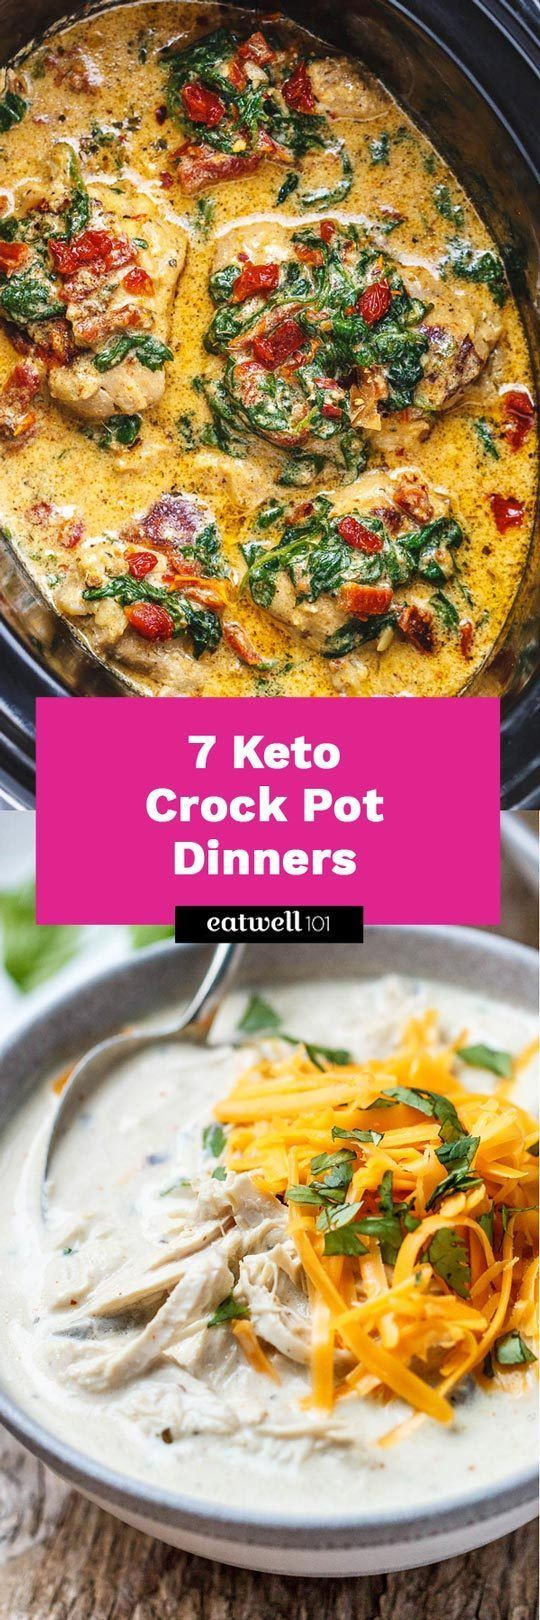 Healthy Keto Dinner Recipes Crock Pot
 7 Keto Crock Pot Recipes for Easy Low Carb Dinner